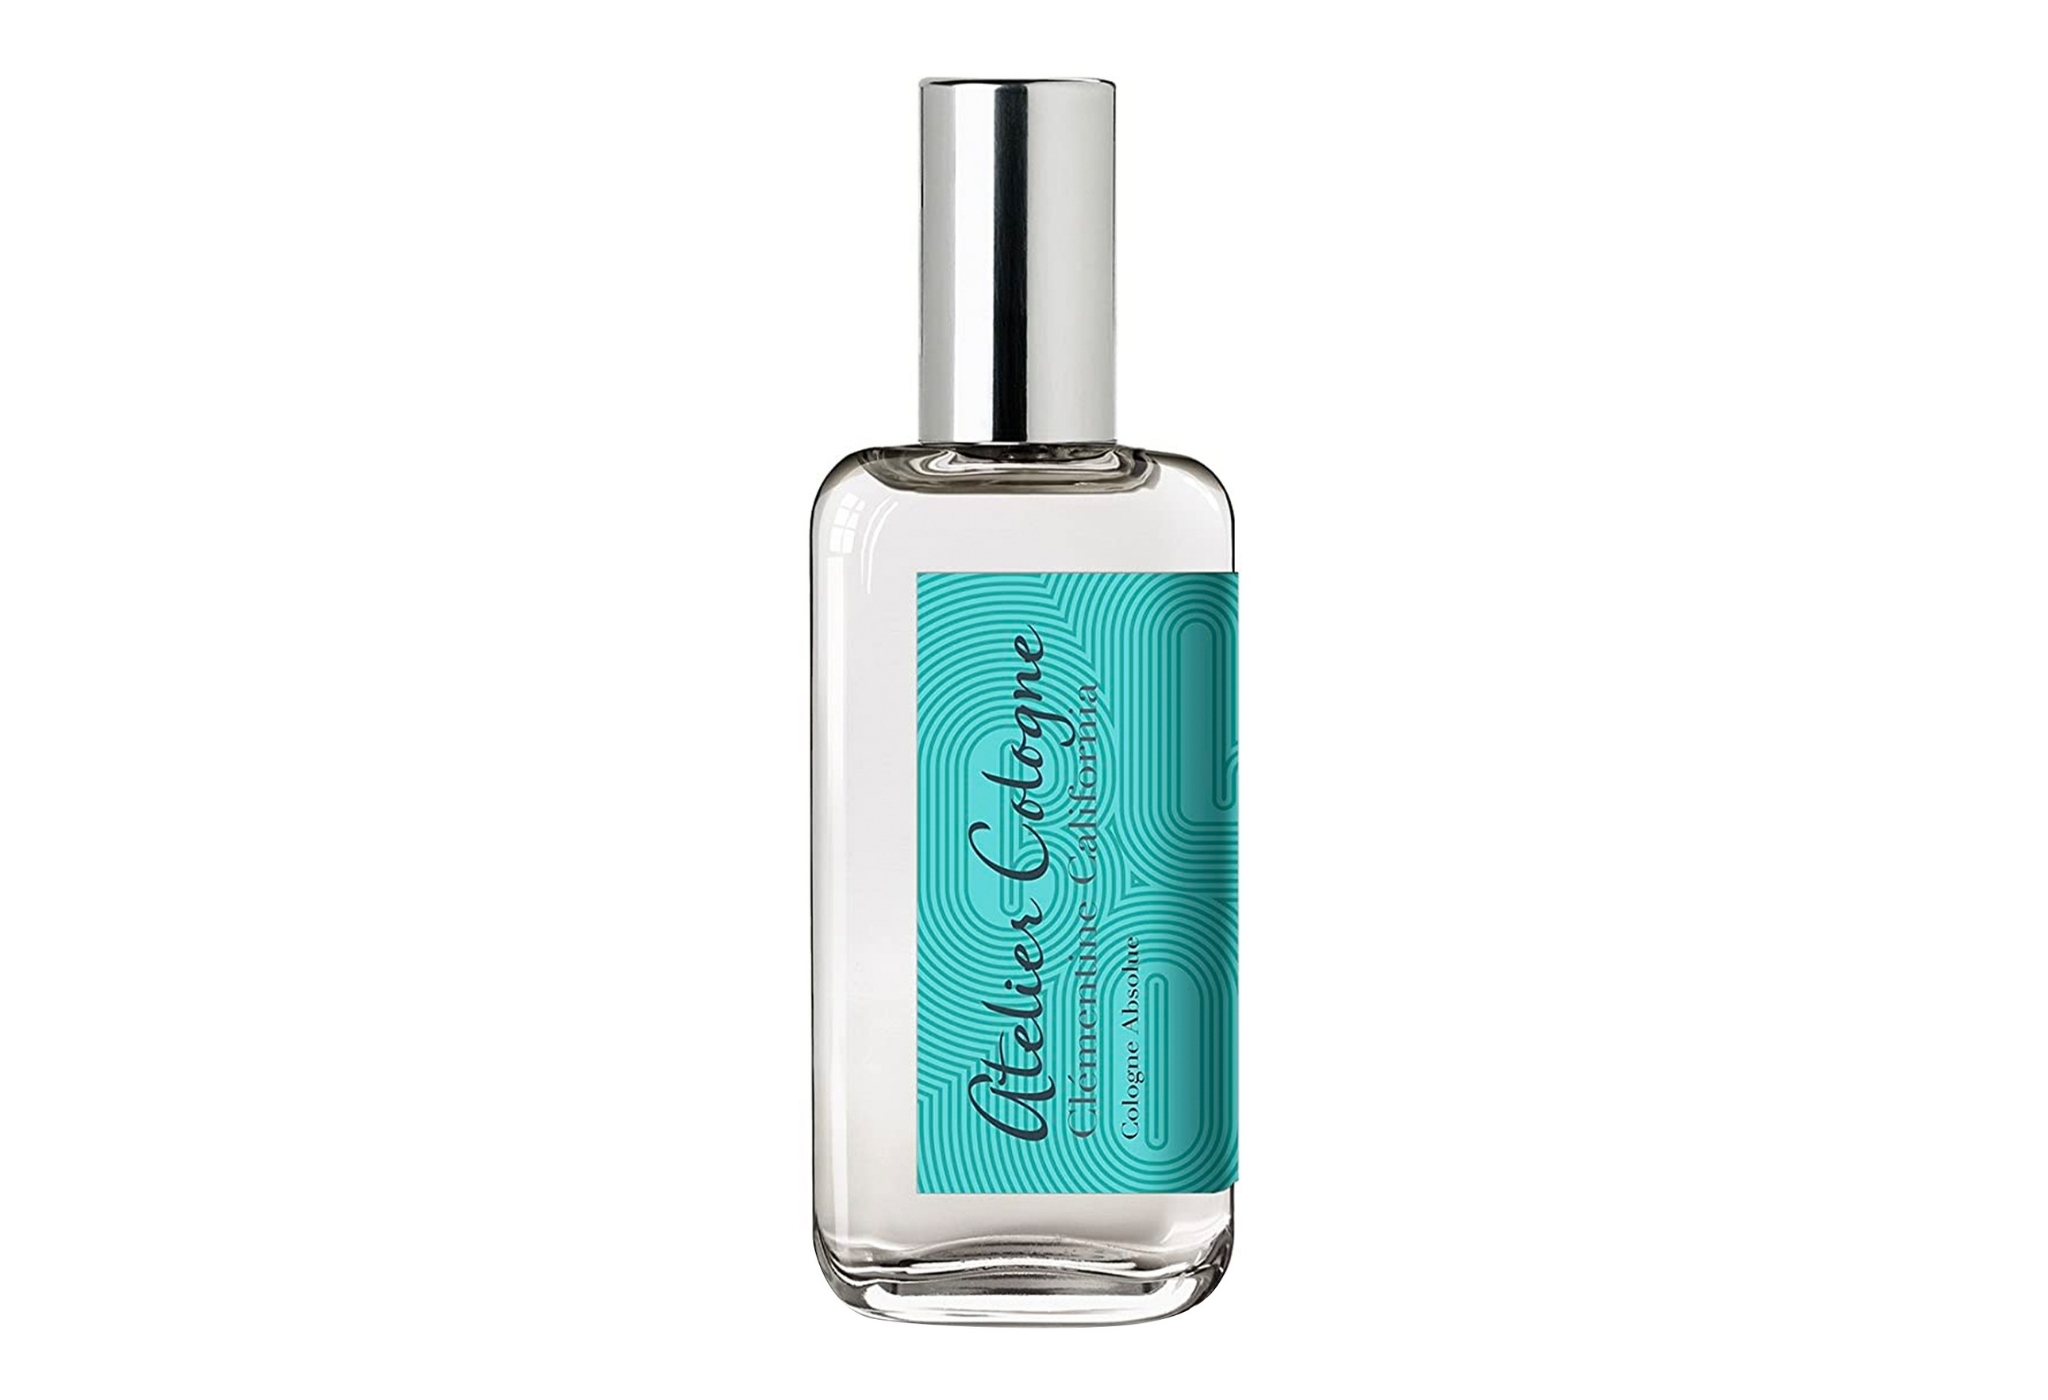 atelier cologne clementine california - best summer fragrances for men